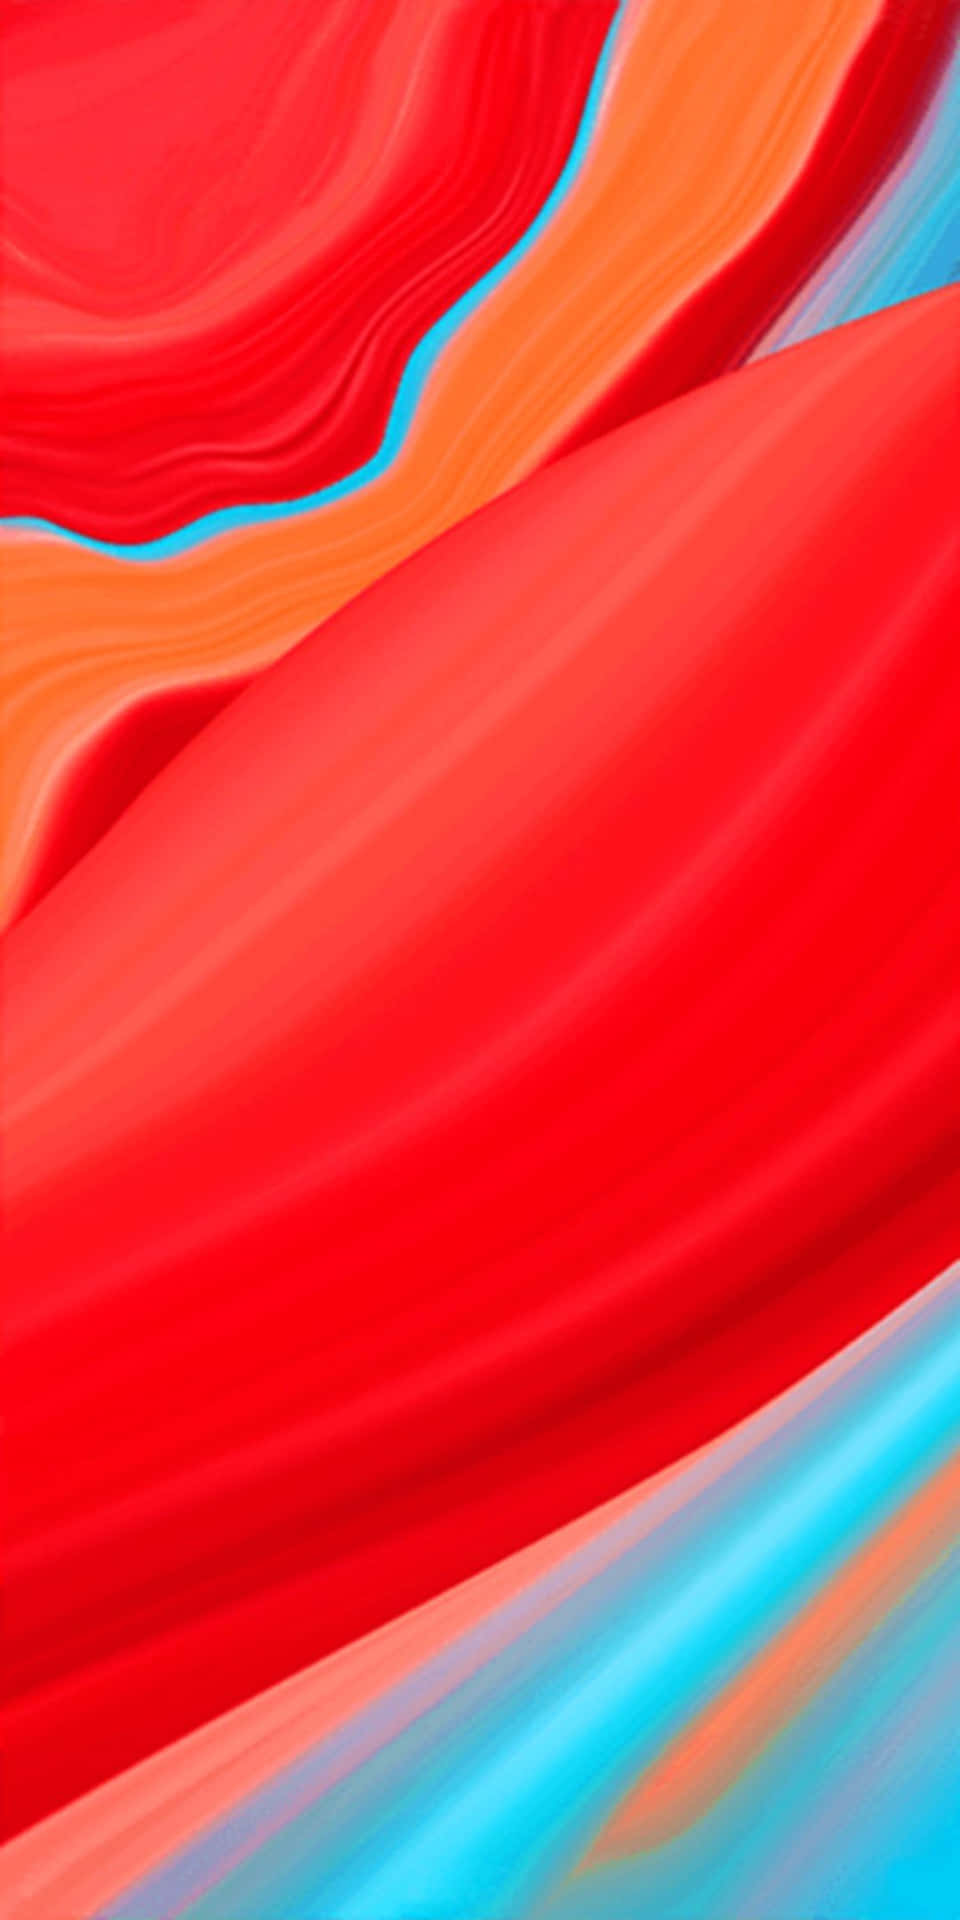 Download wallpapers 4K, Xiaomi red logo, vertical text, red brickwall,  Xiaomi neon logo, creative, Xiaomi logo, artwork, Xiaomi for desktop free.  Pictures for desktop free